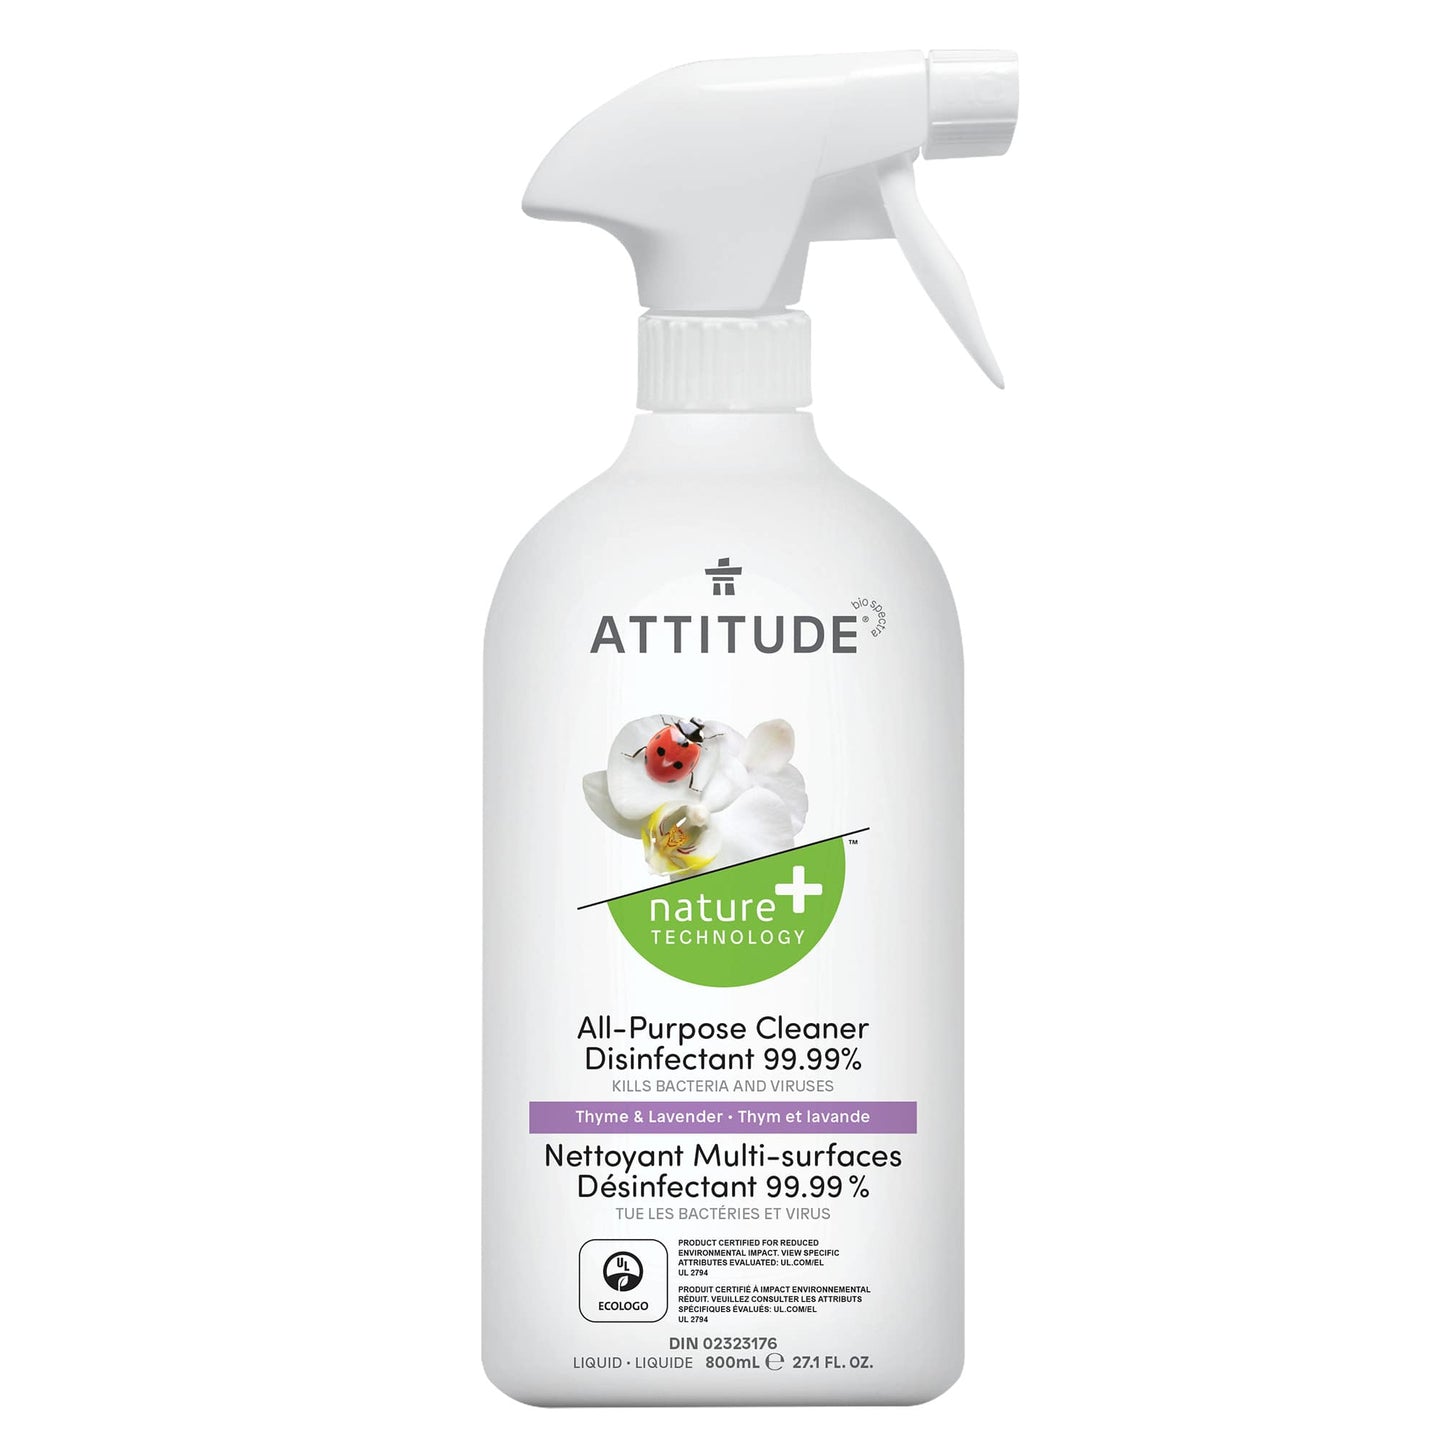 ATTITUDE Nature+ All Purpose Cleaner Disinfectant 99.9%  - Thym et lavande - Bouteille 800 mL 10912_fr? _main? Thym et lavande / Bouteille 800 mL